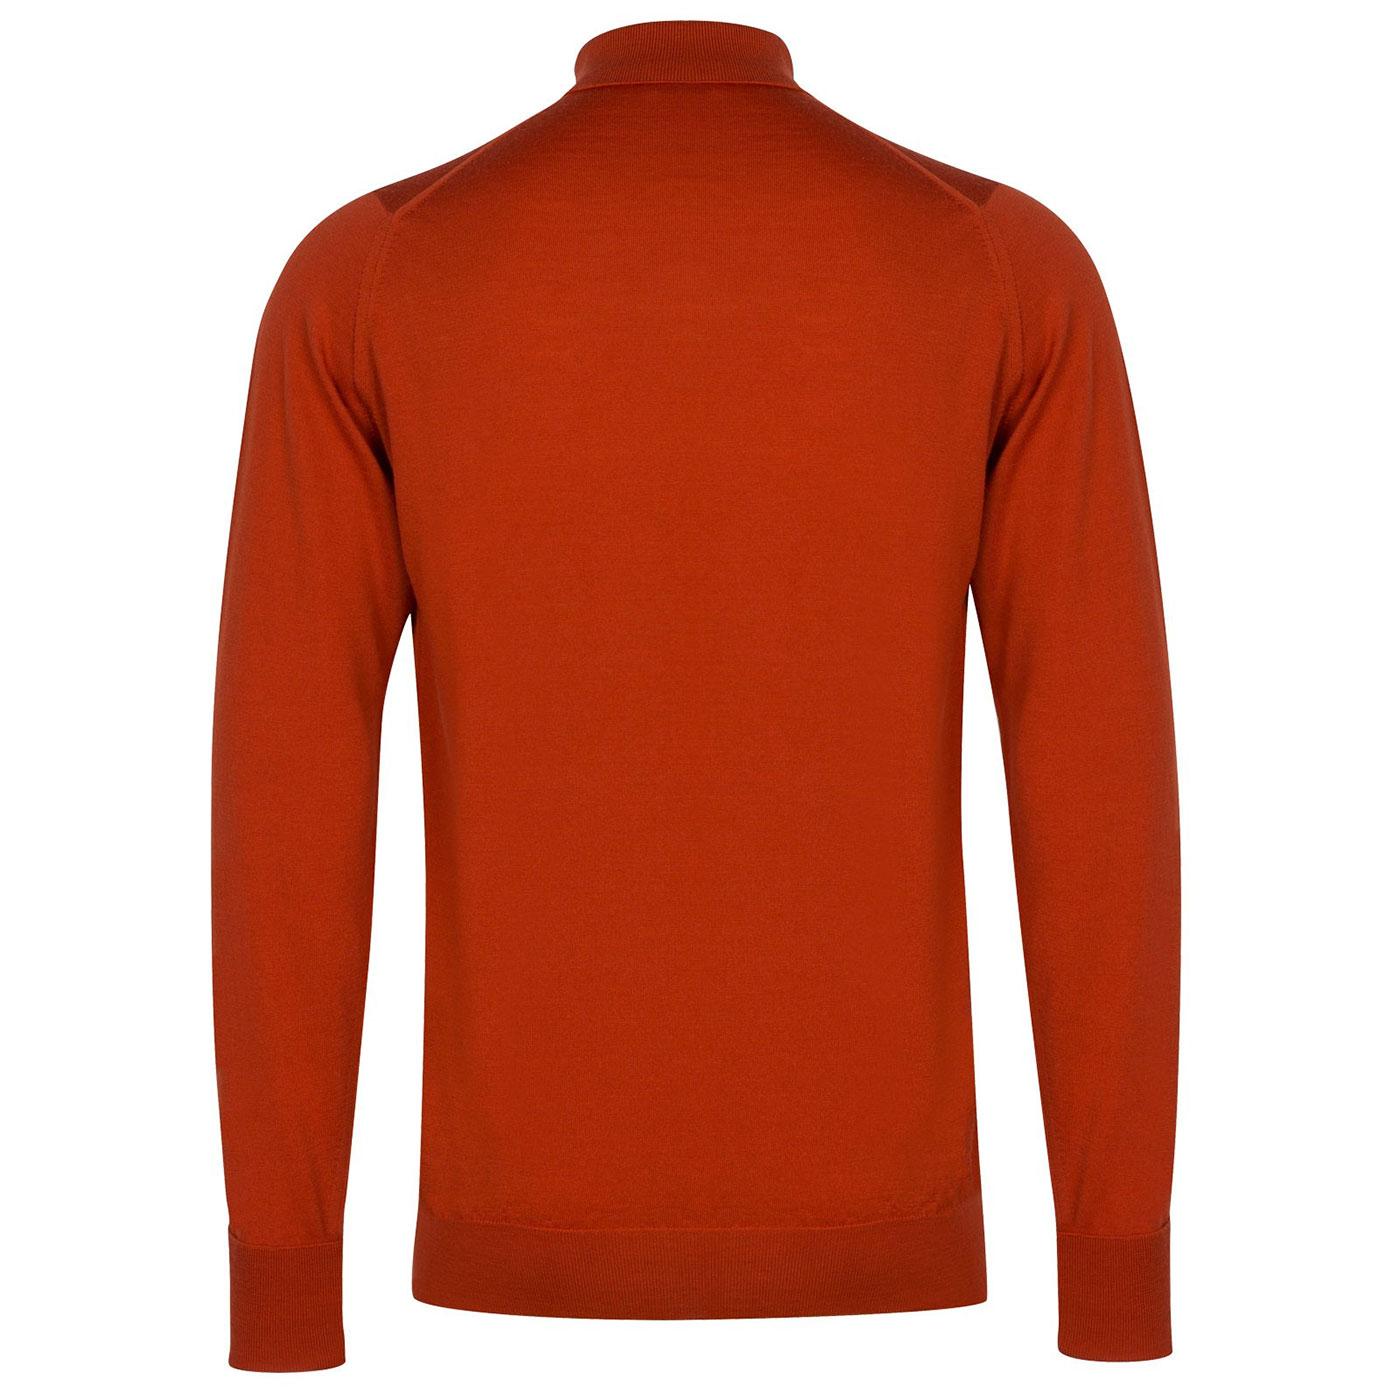 Dorset JOHN SMEDLEY Knitted Wool Mod Polo Shirt Orange